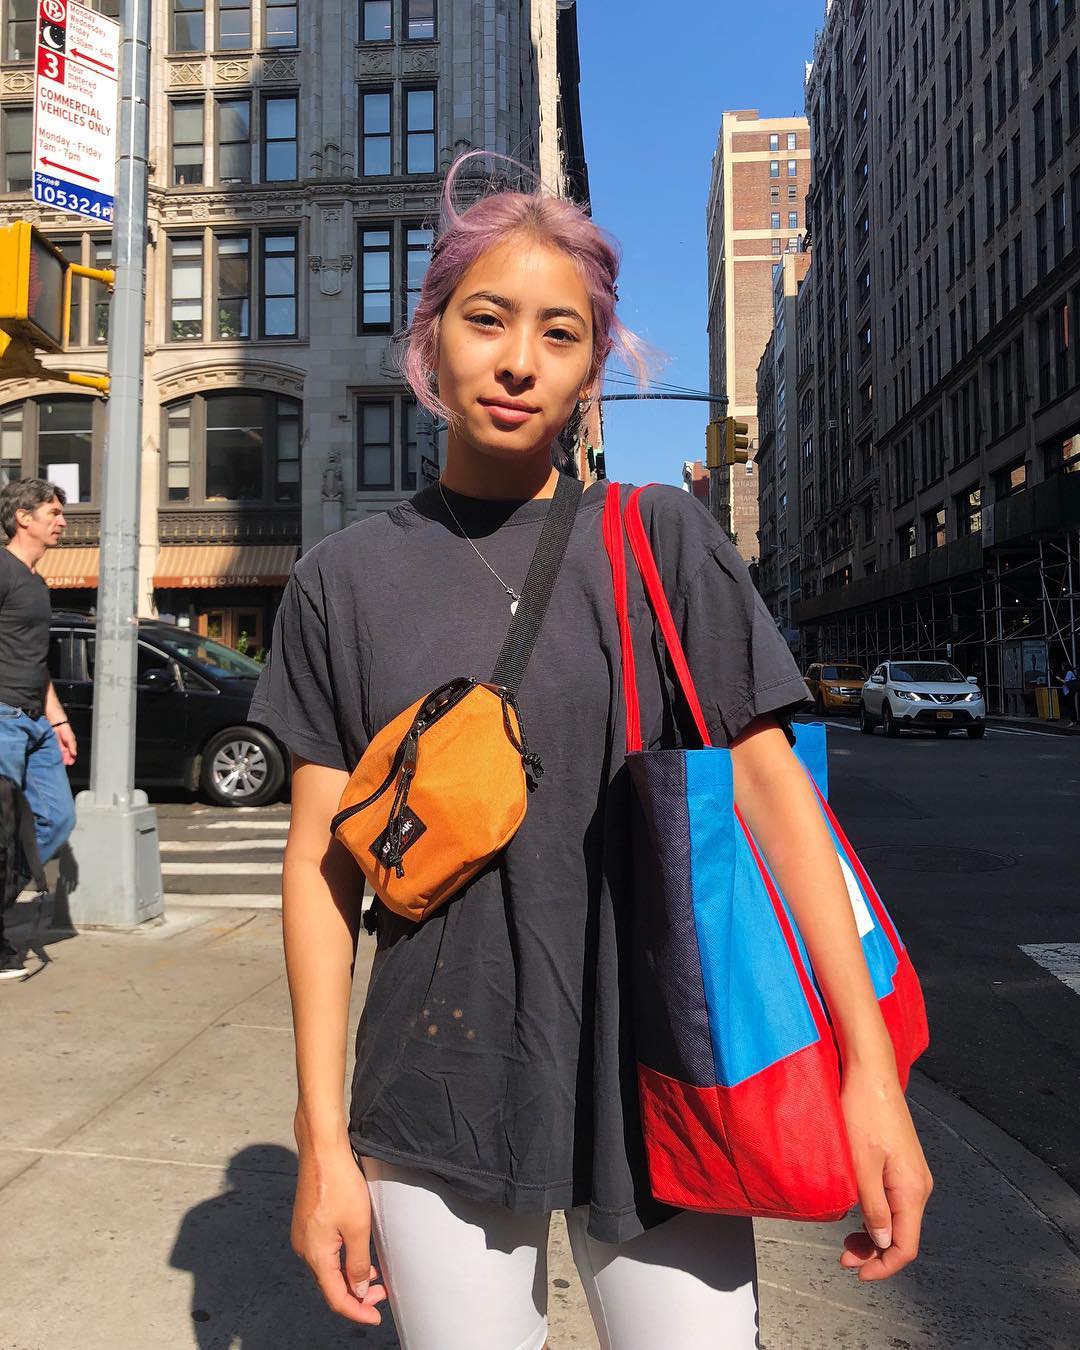 New York City Crossbody Bags